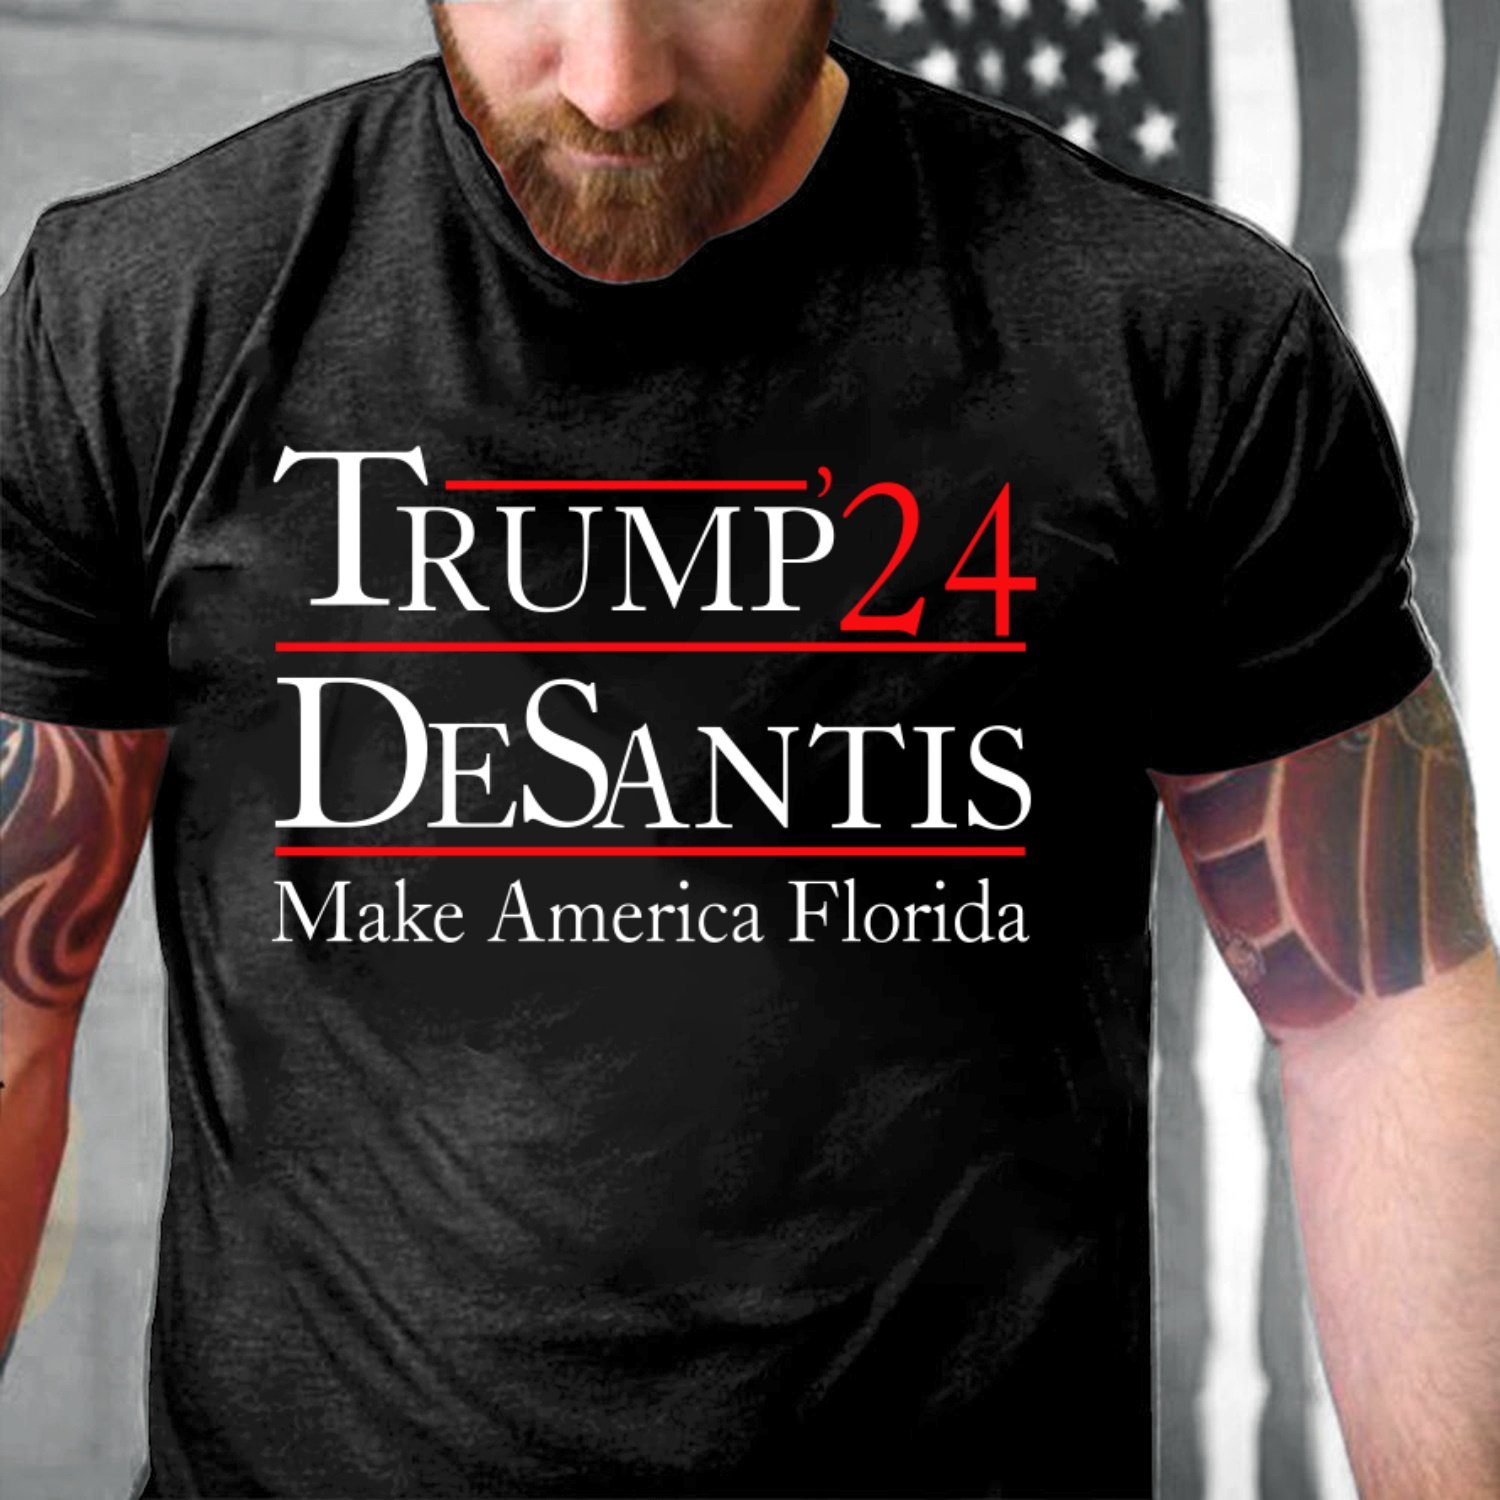 Funny Quote Shirt, Trump Shirt, Trump'24 Desantis Make America Florida T-Shirt KM1606